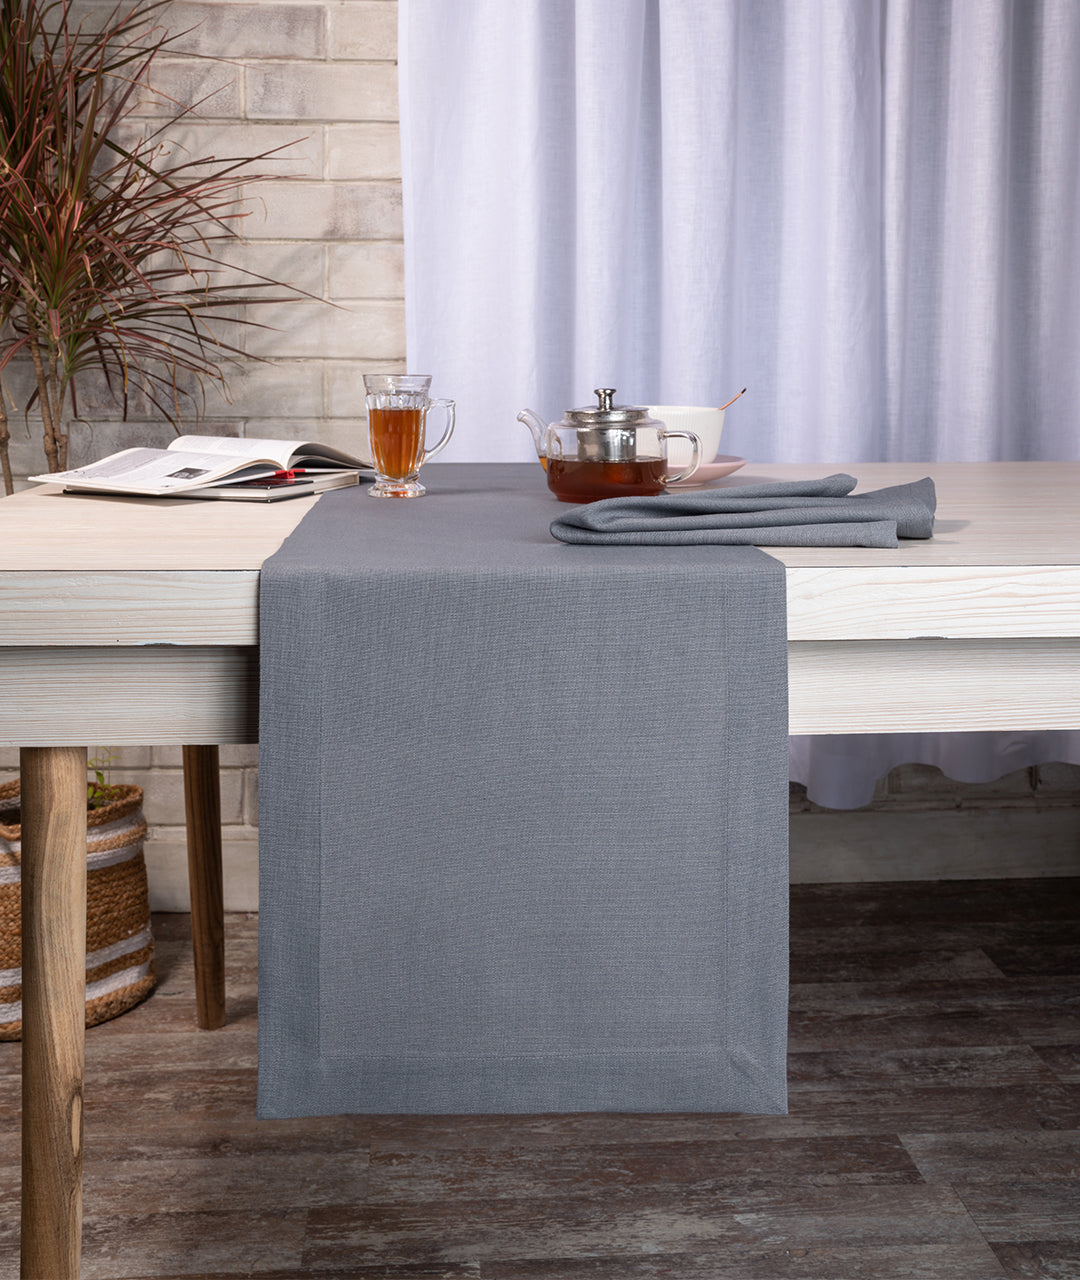 Charcoal Grey Linen Textured Table Runner - Mitered Corner